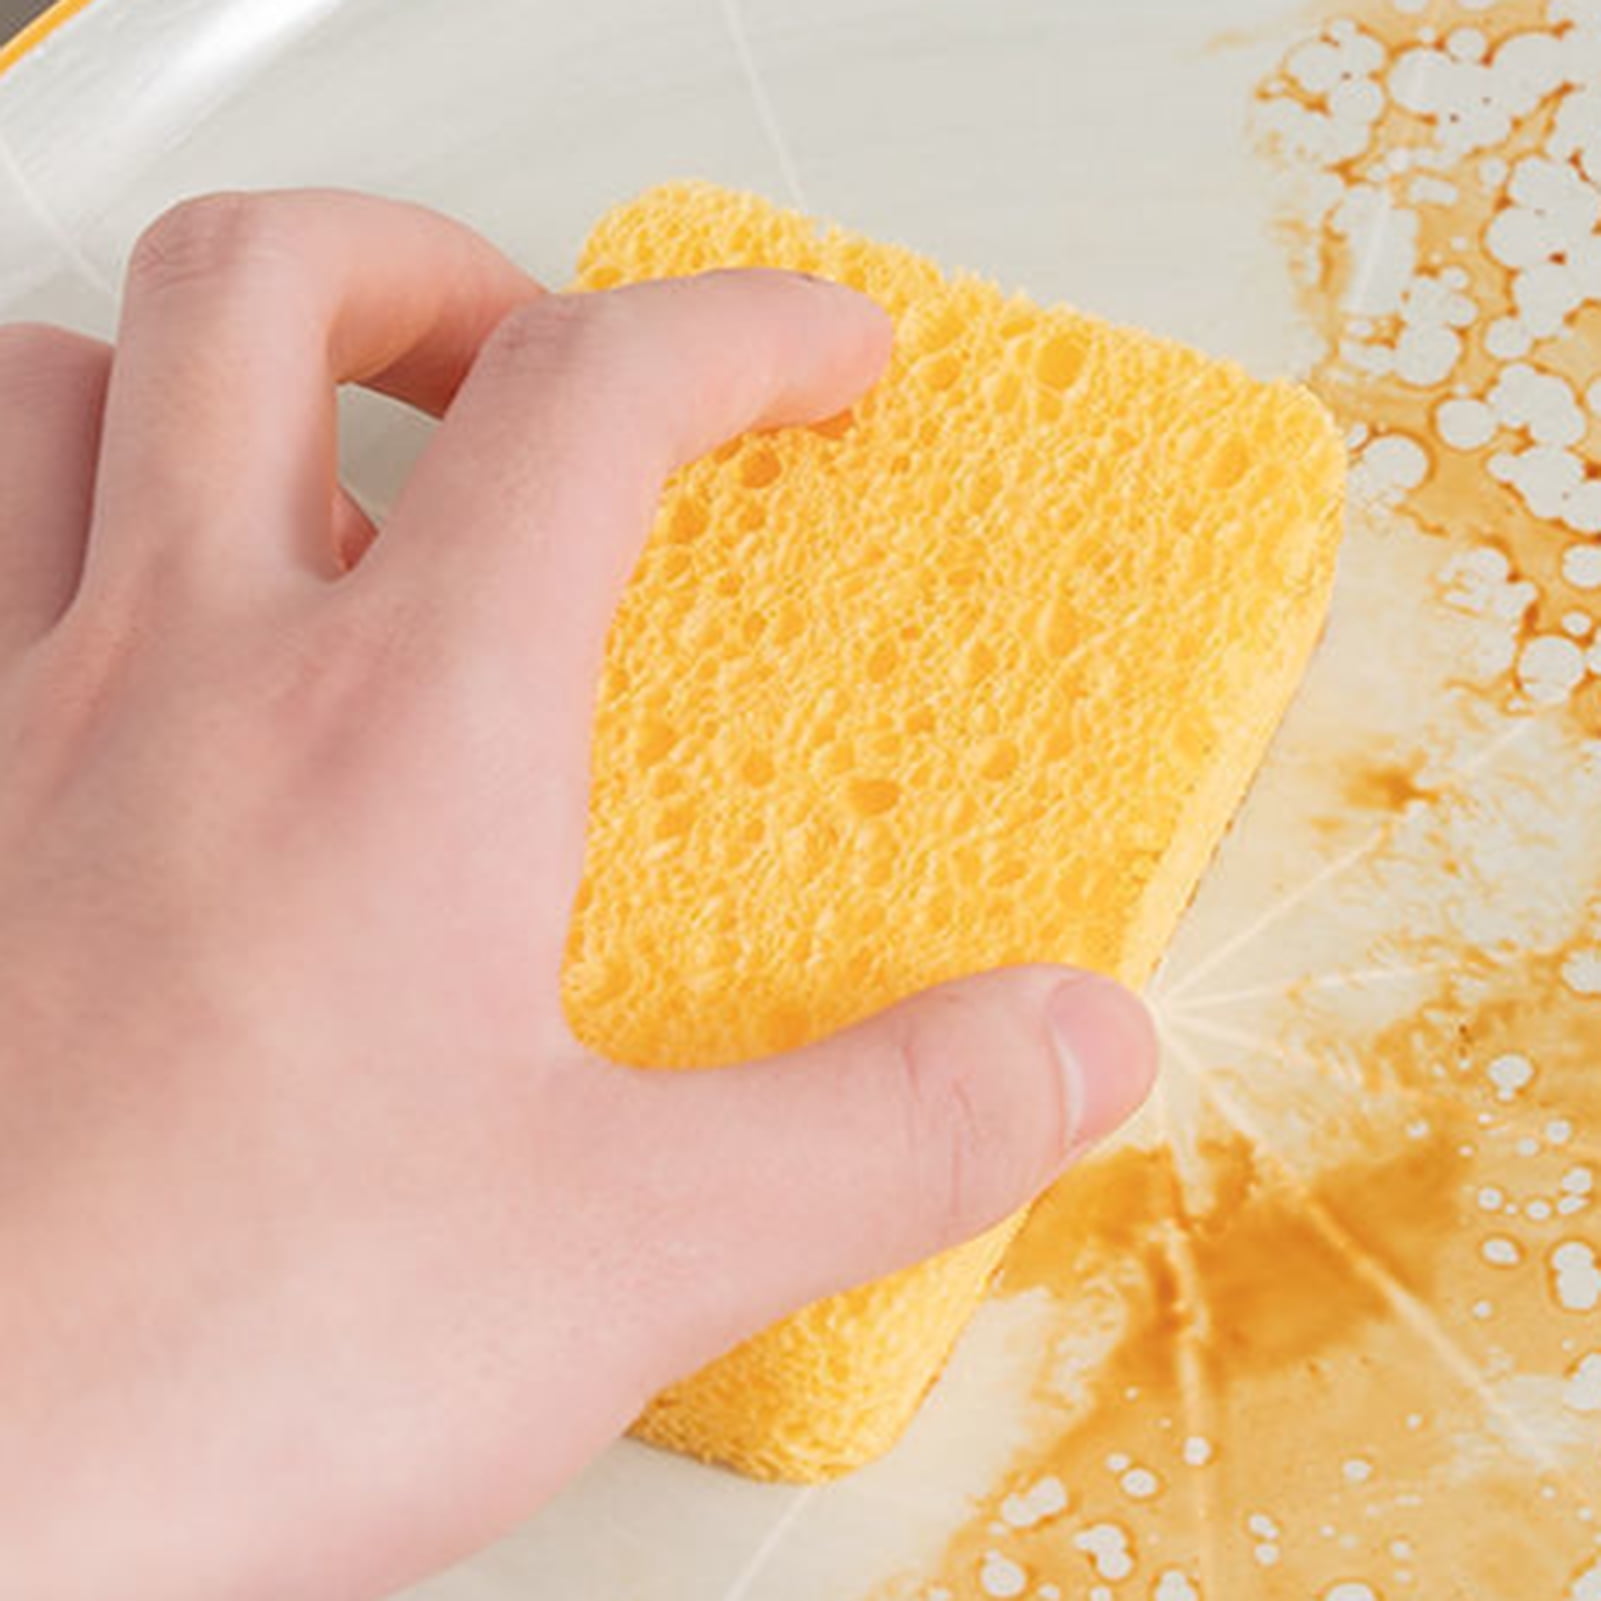 Fikoksol 4pcs Damp Dusting Sponge Yellow, Household Clean Sponges